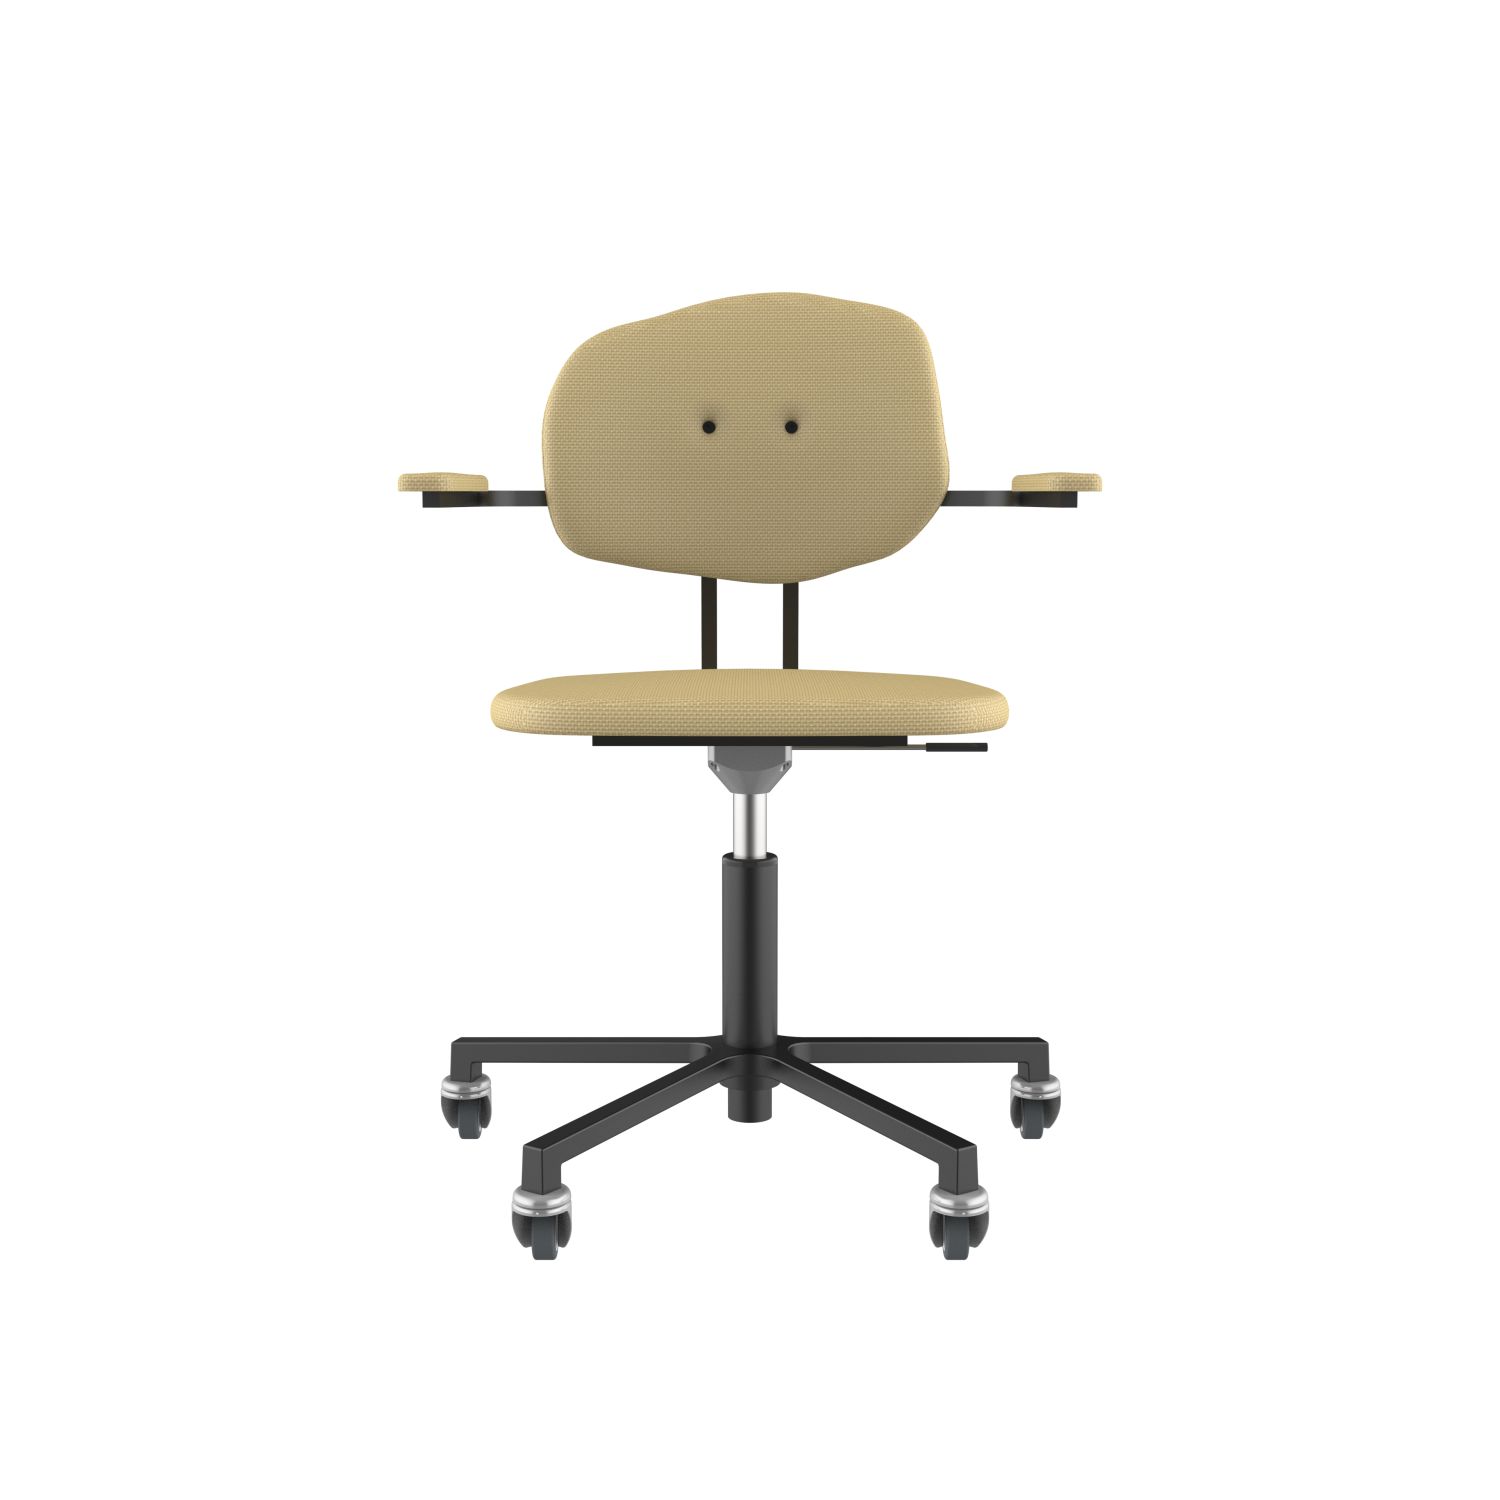 lensvelt maarten baas office chair with armrests backrest e light brown 141 black ral9005 soft wheels